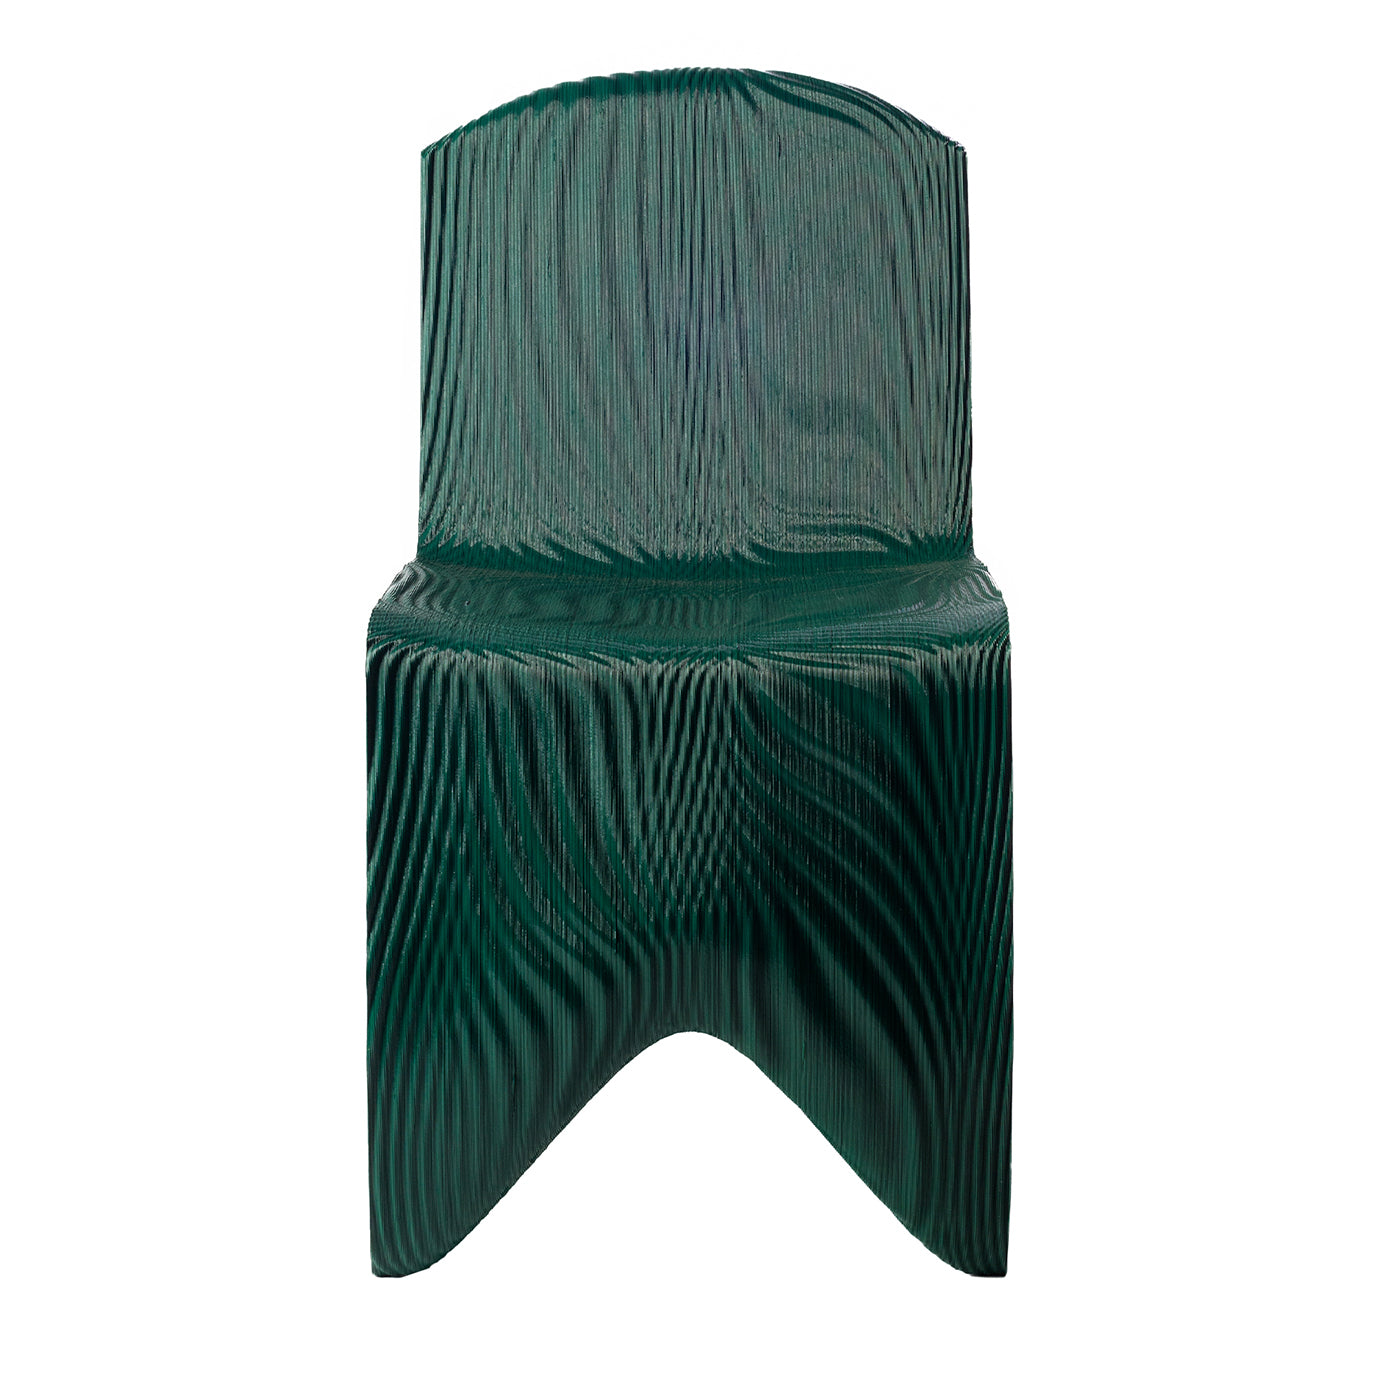 Santorini Green Chair - Alternative view 2